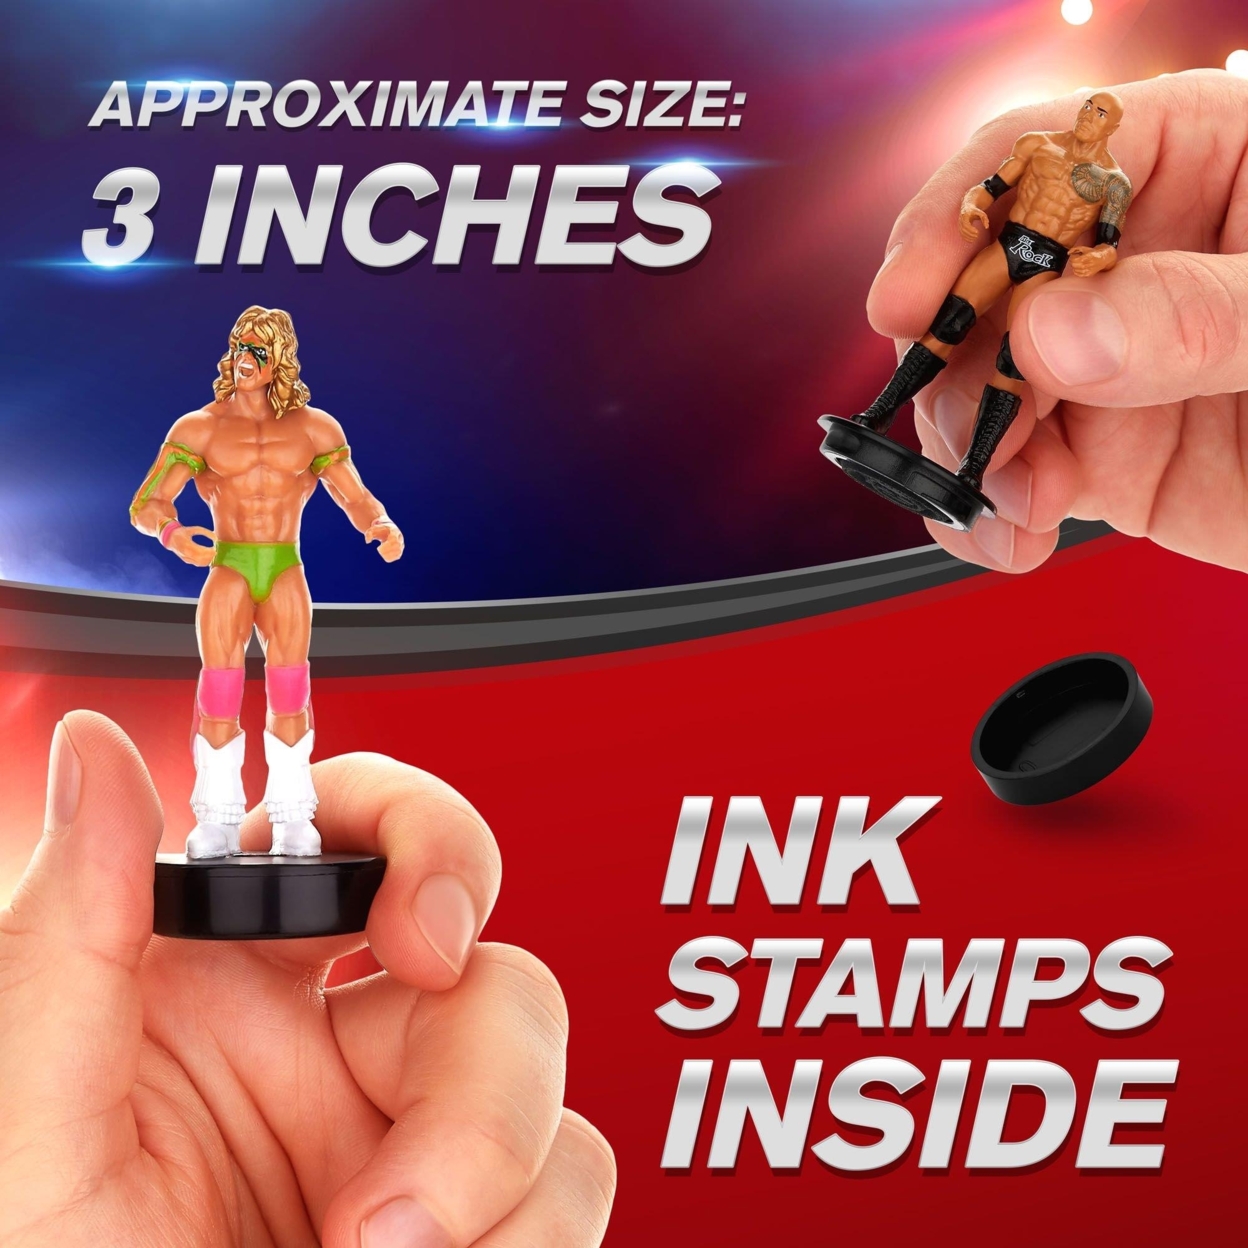 WWE Wrestler Stampers 5pk The Rock Mysterio Becky Lynch Ultimate Warrior PMI International